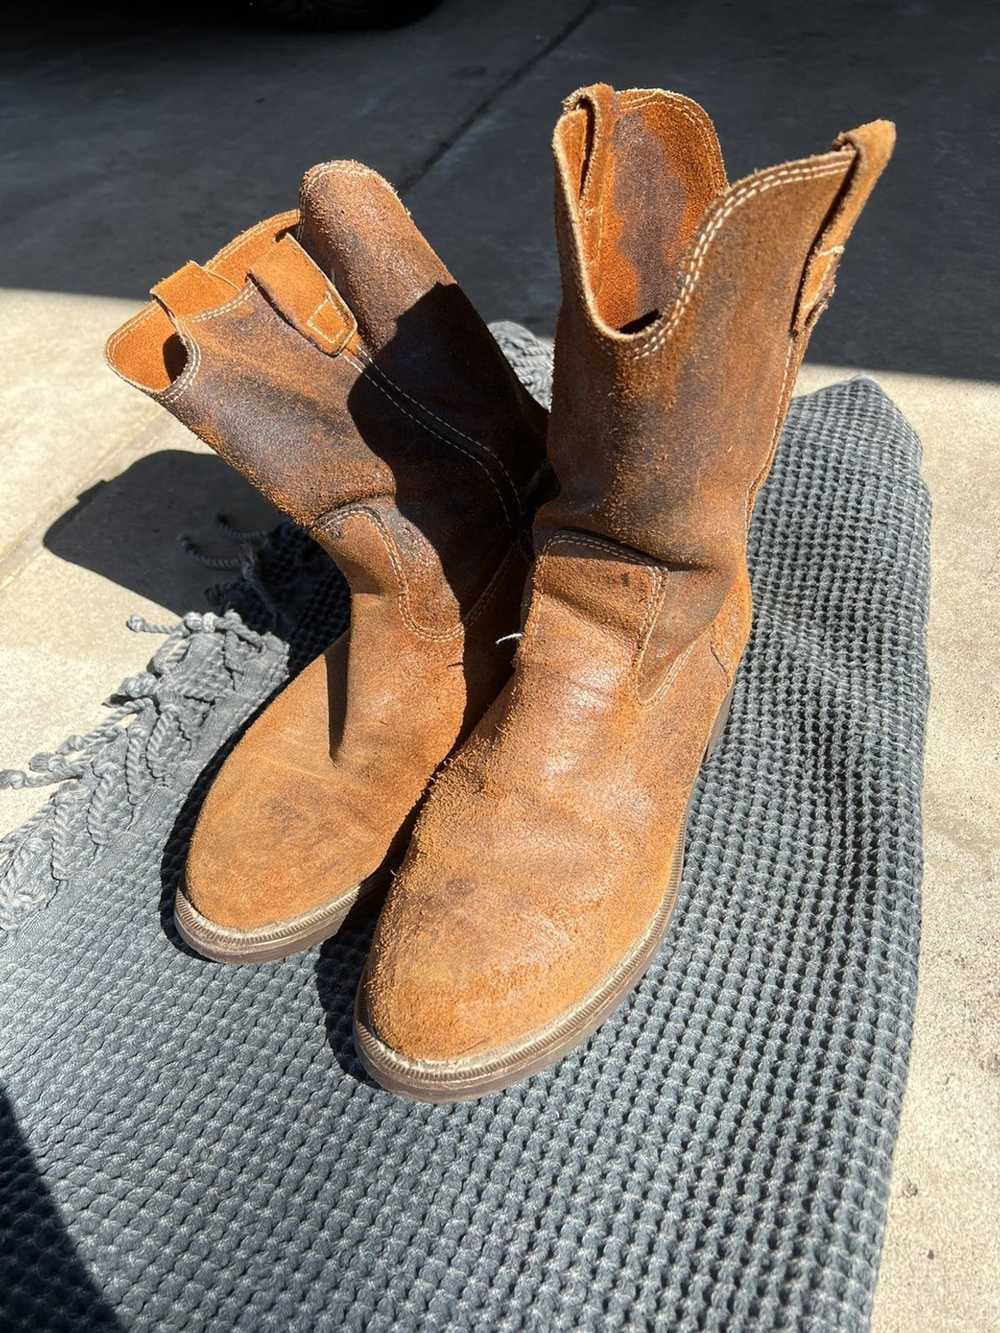 Vintage 70s distressed cowboy boots - image 1